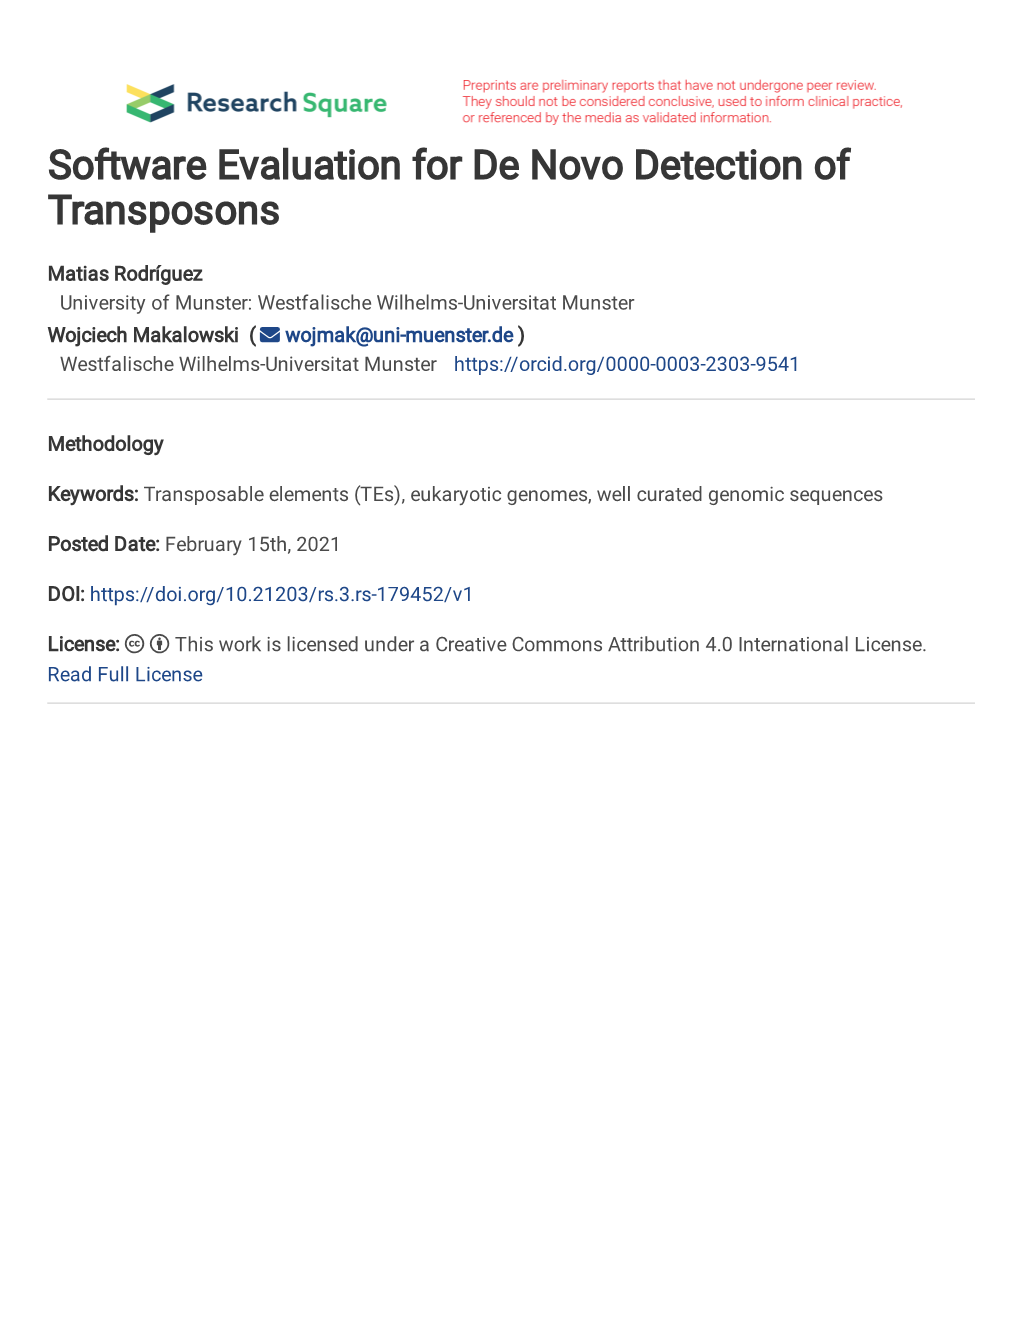 Software Evaluation for De Novo Detection of Transposons